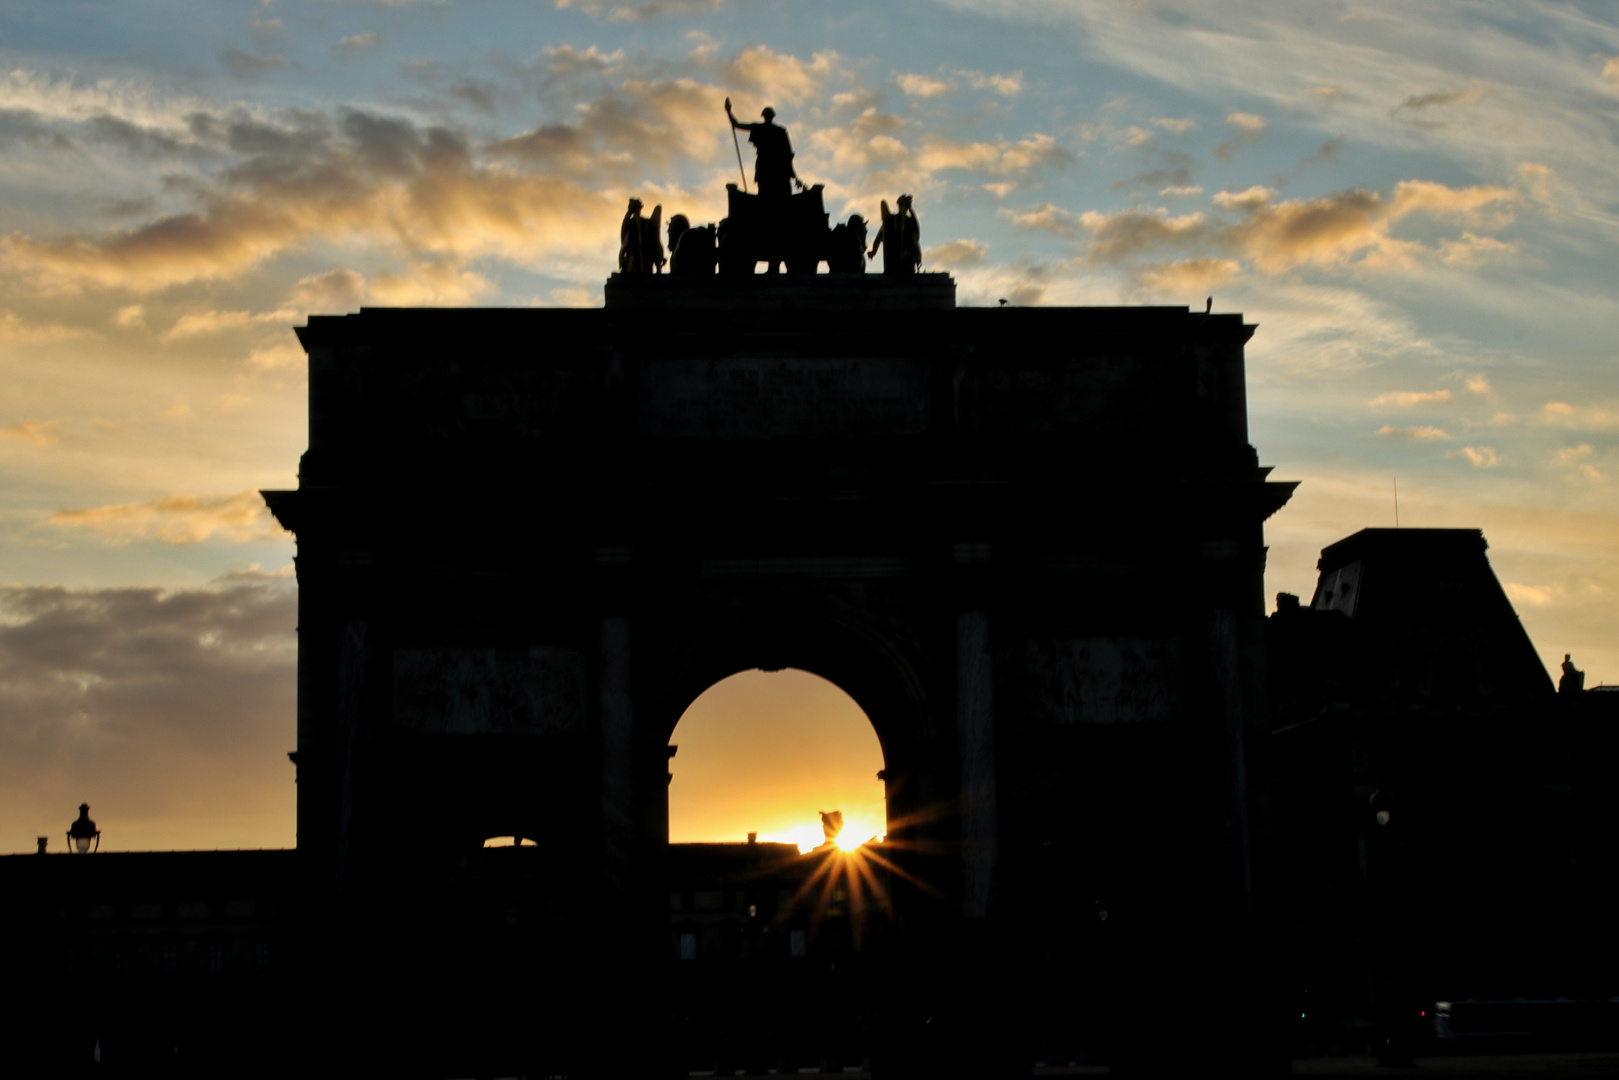 Sunrise over the Louvre